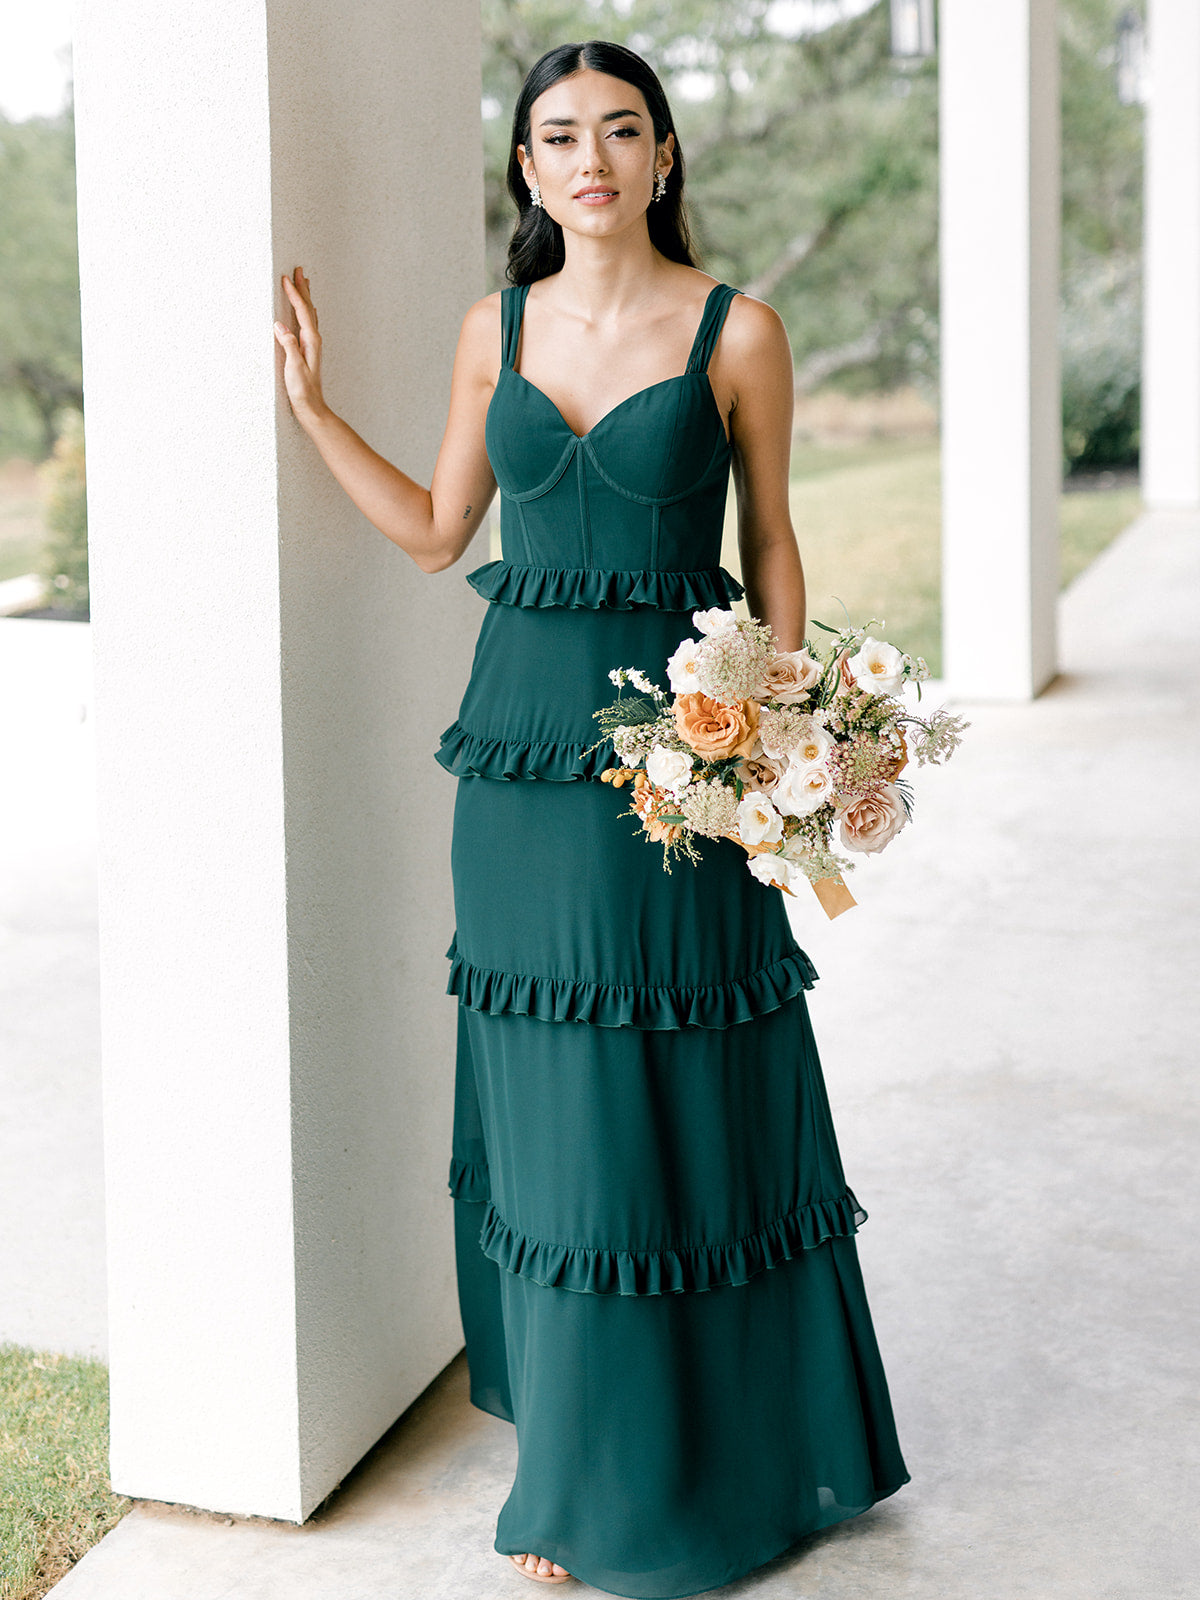 Rosette Bridesmaid Dress at Revelry | Sloane Chiffon Dress | Made to Order Rosette